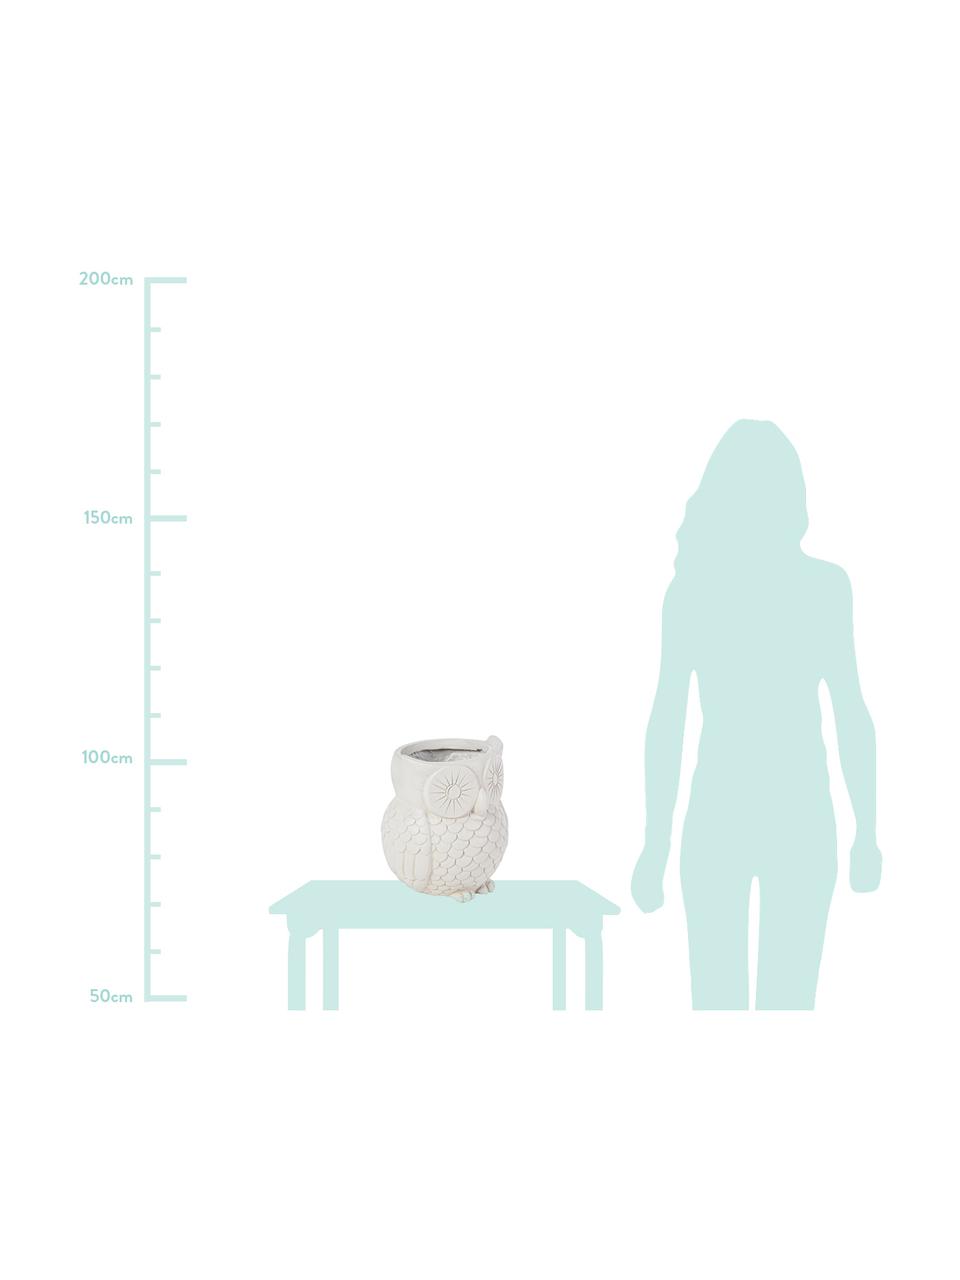 Portavaso Owl, Materiale sintetico, Bianco latteo, Ø 35 x Alt. 31 cm